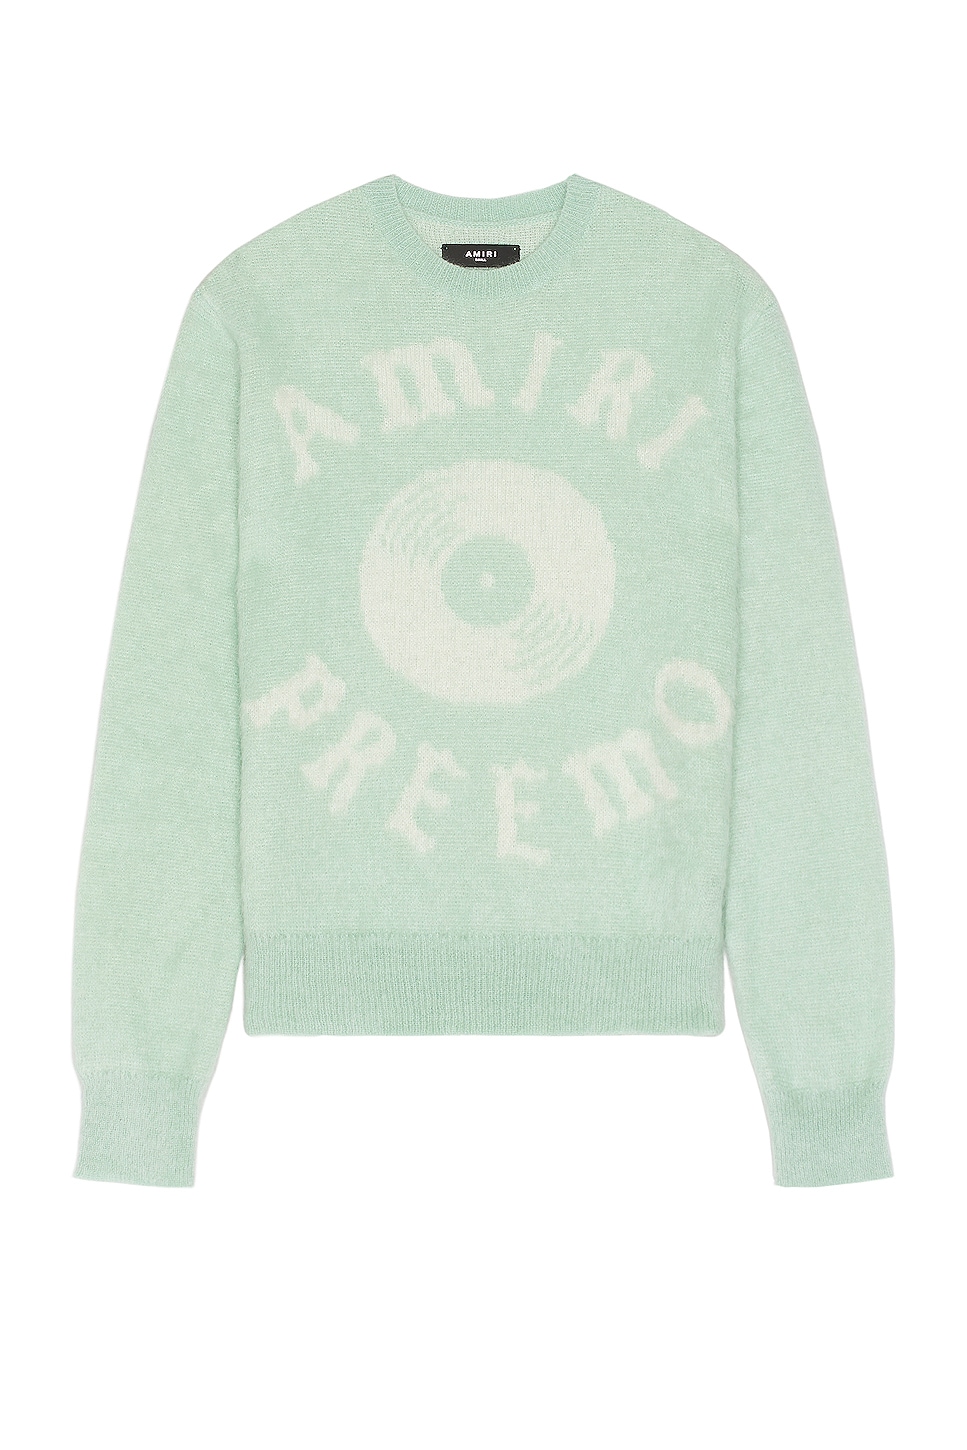 Image 1 of Amiri Premier Sweater in Frosty Green